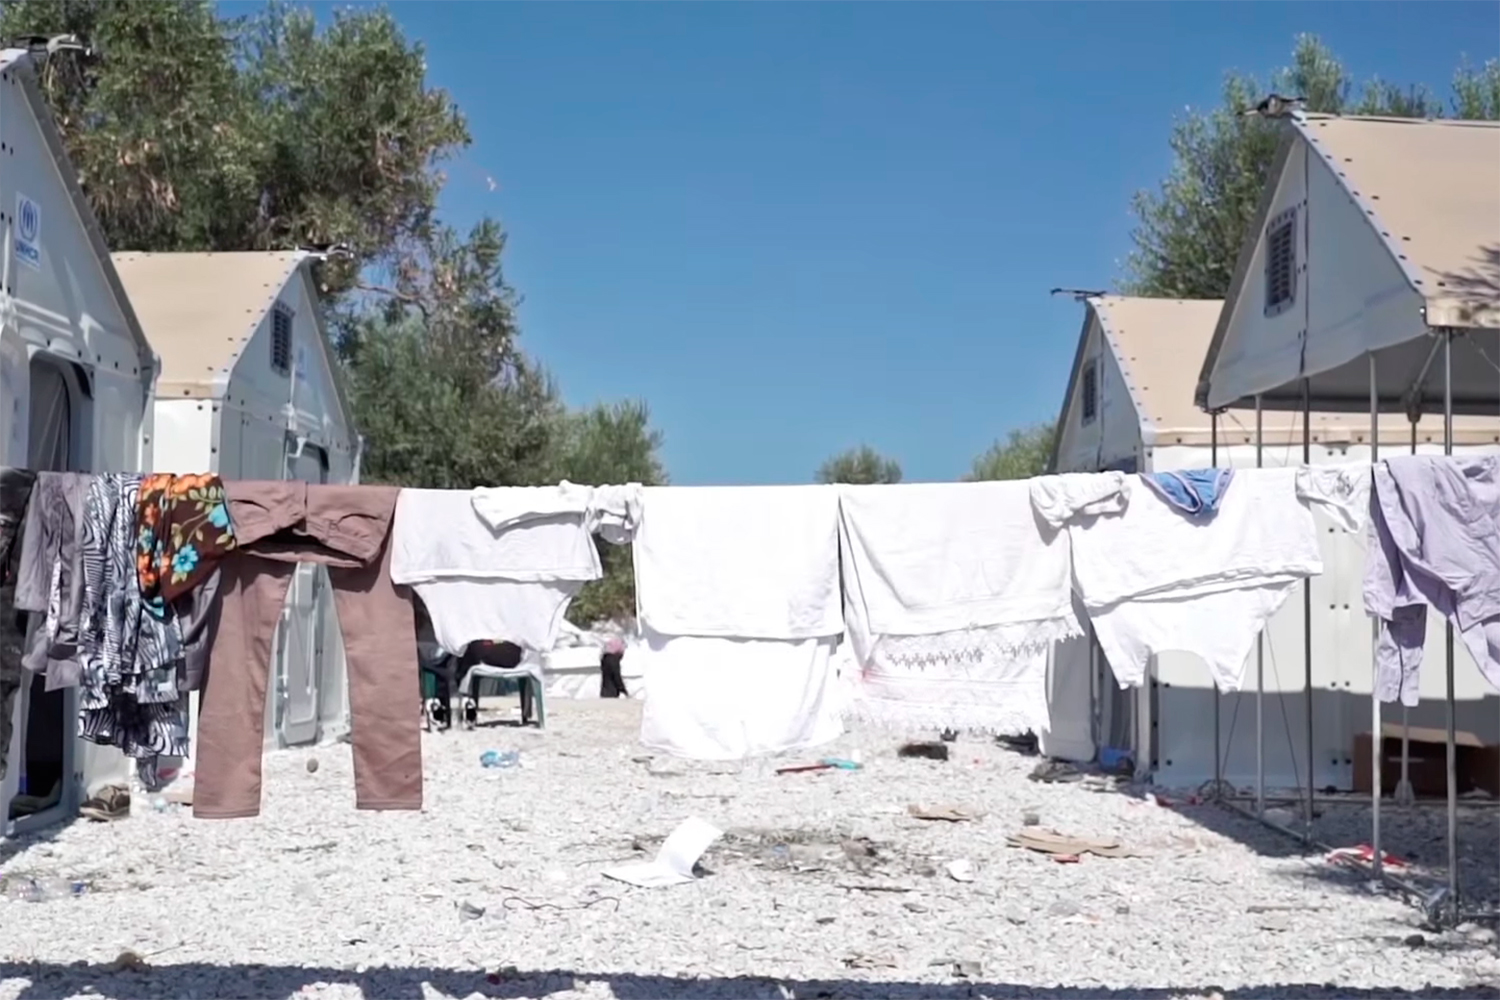 Ikea designs refugee shelters